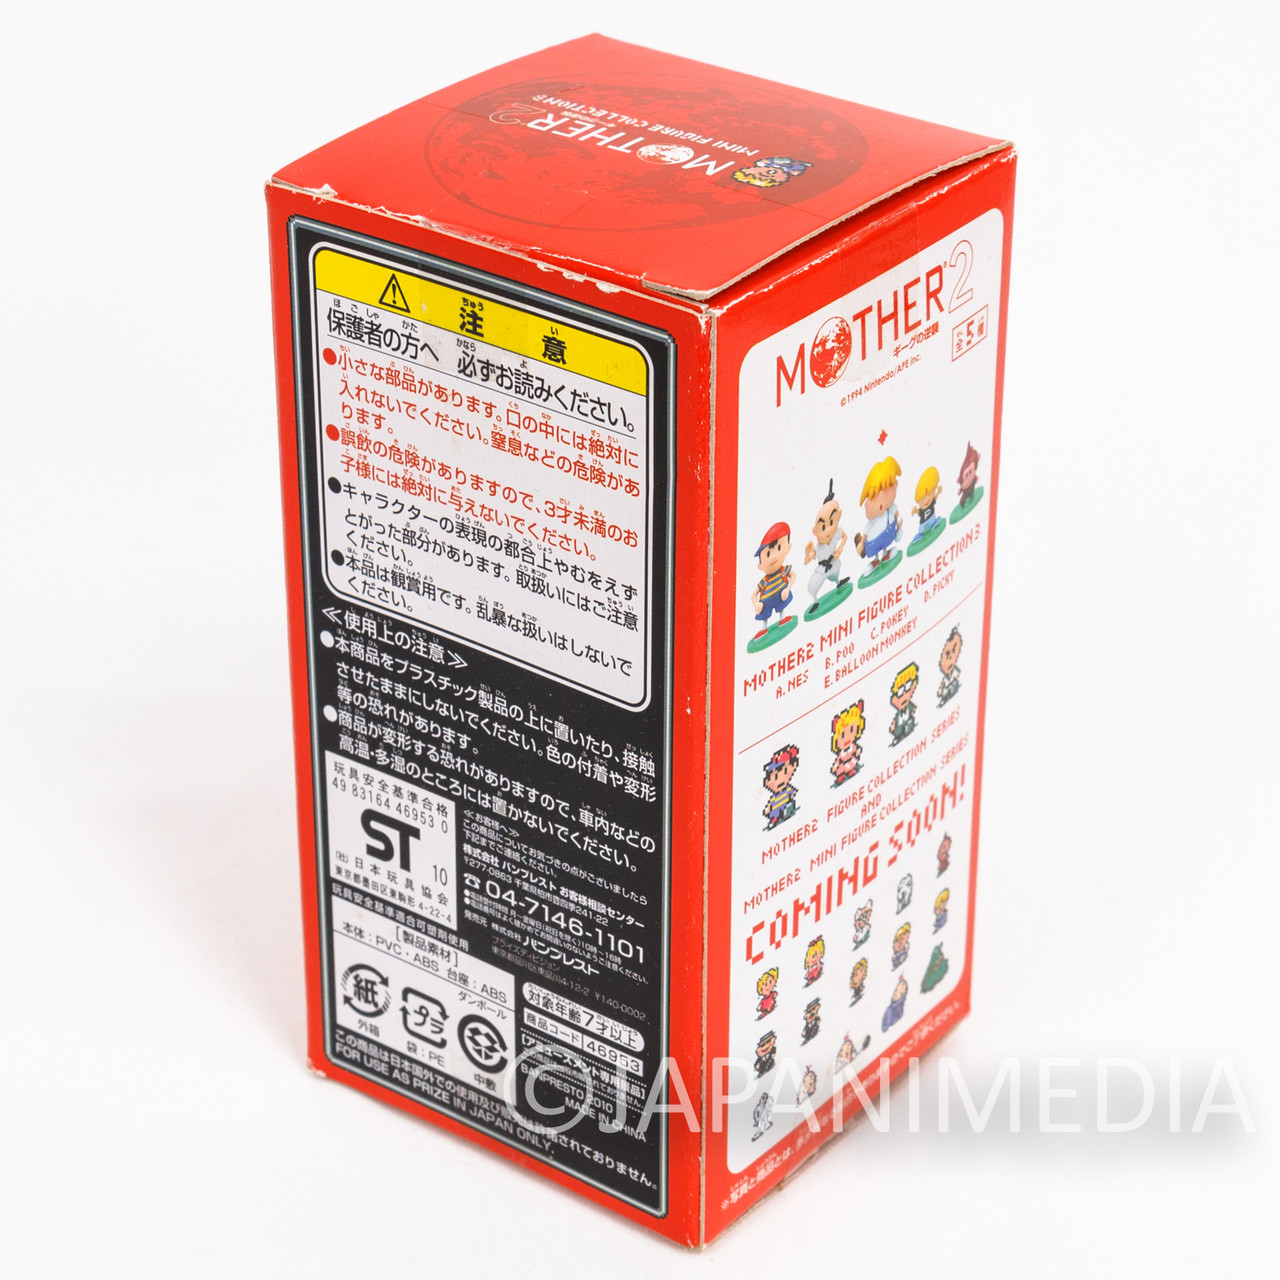 Mother 2 Pokey Minch Mini Figure Collection Earthbound Nintendo Nes Japanimedia Store 3943